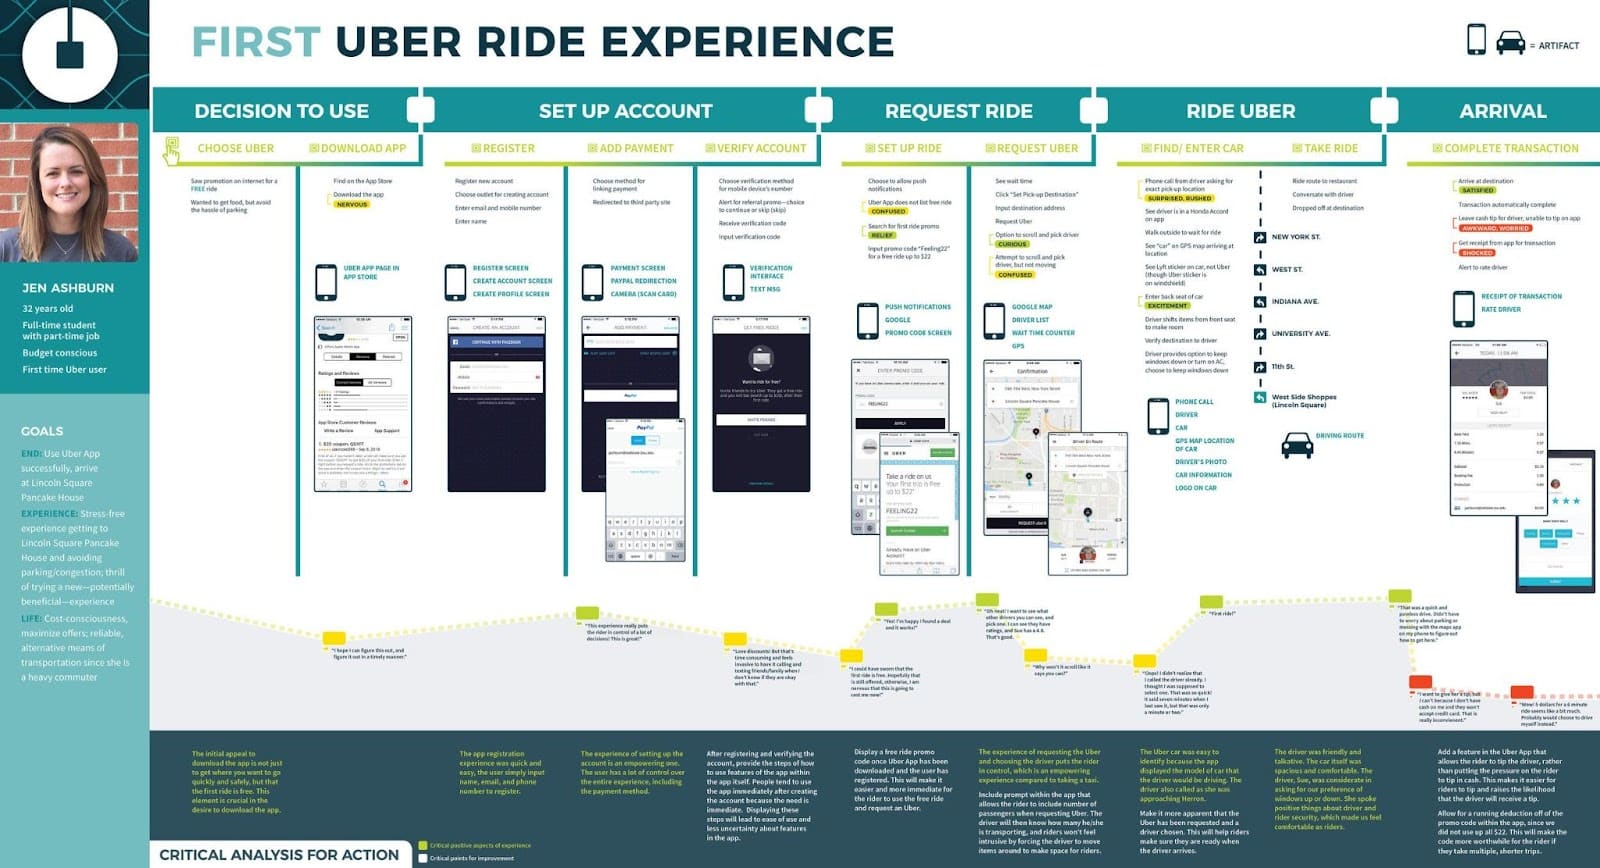 The user journey of UBER